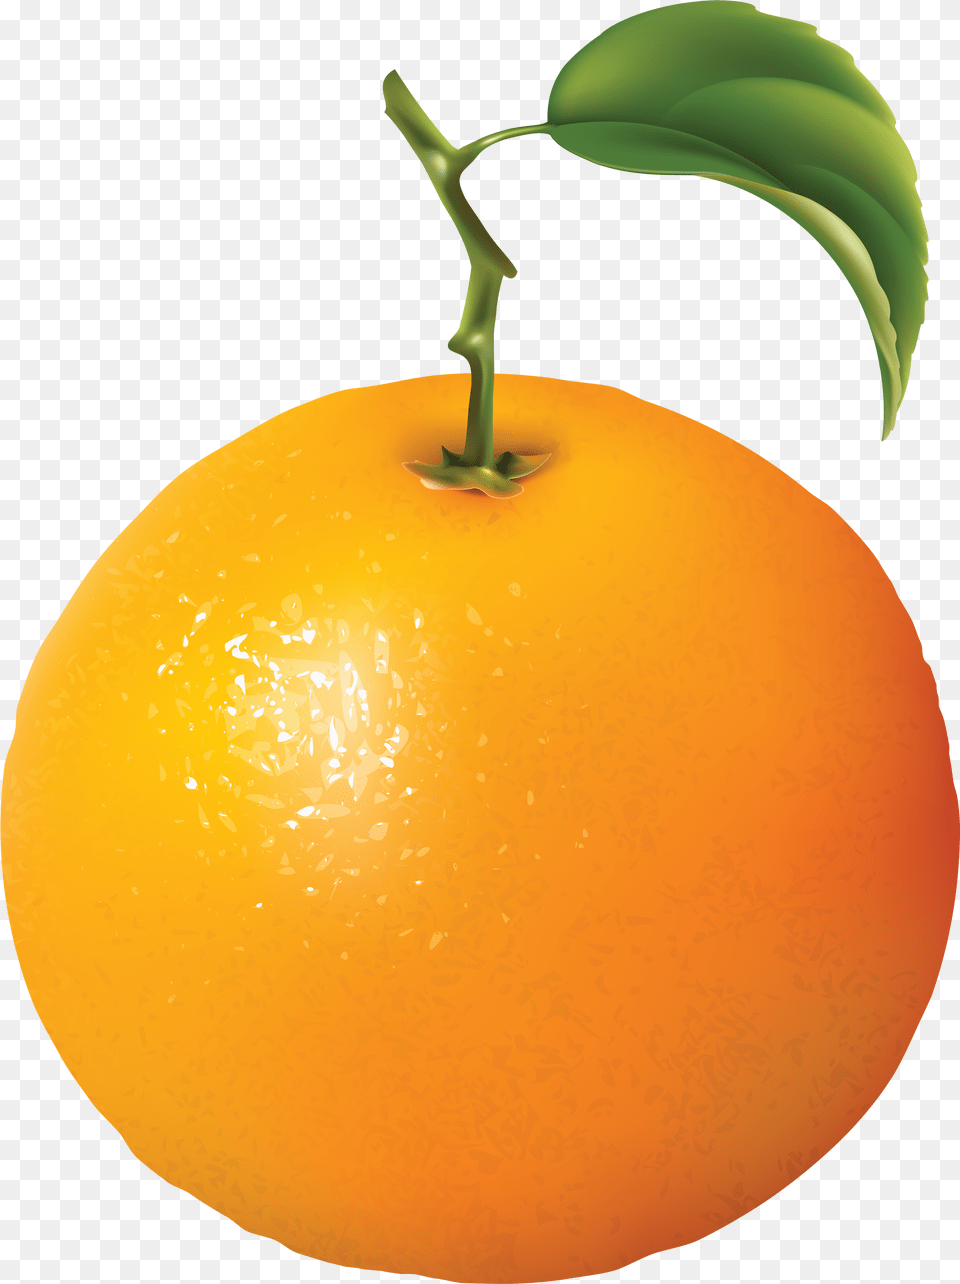 Fruits Clipart Diagram Of An Orange, Citrus Fruit, Food, Fruit, Grapefruit Png Image